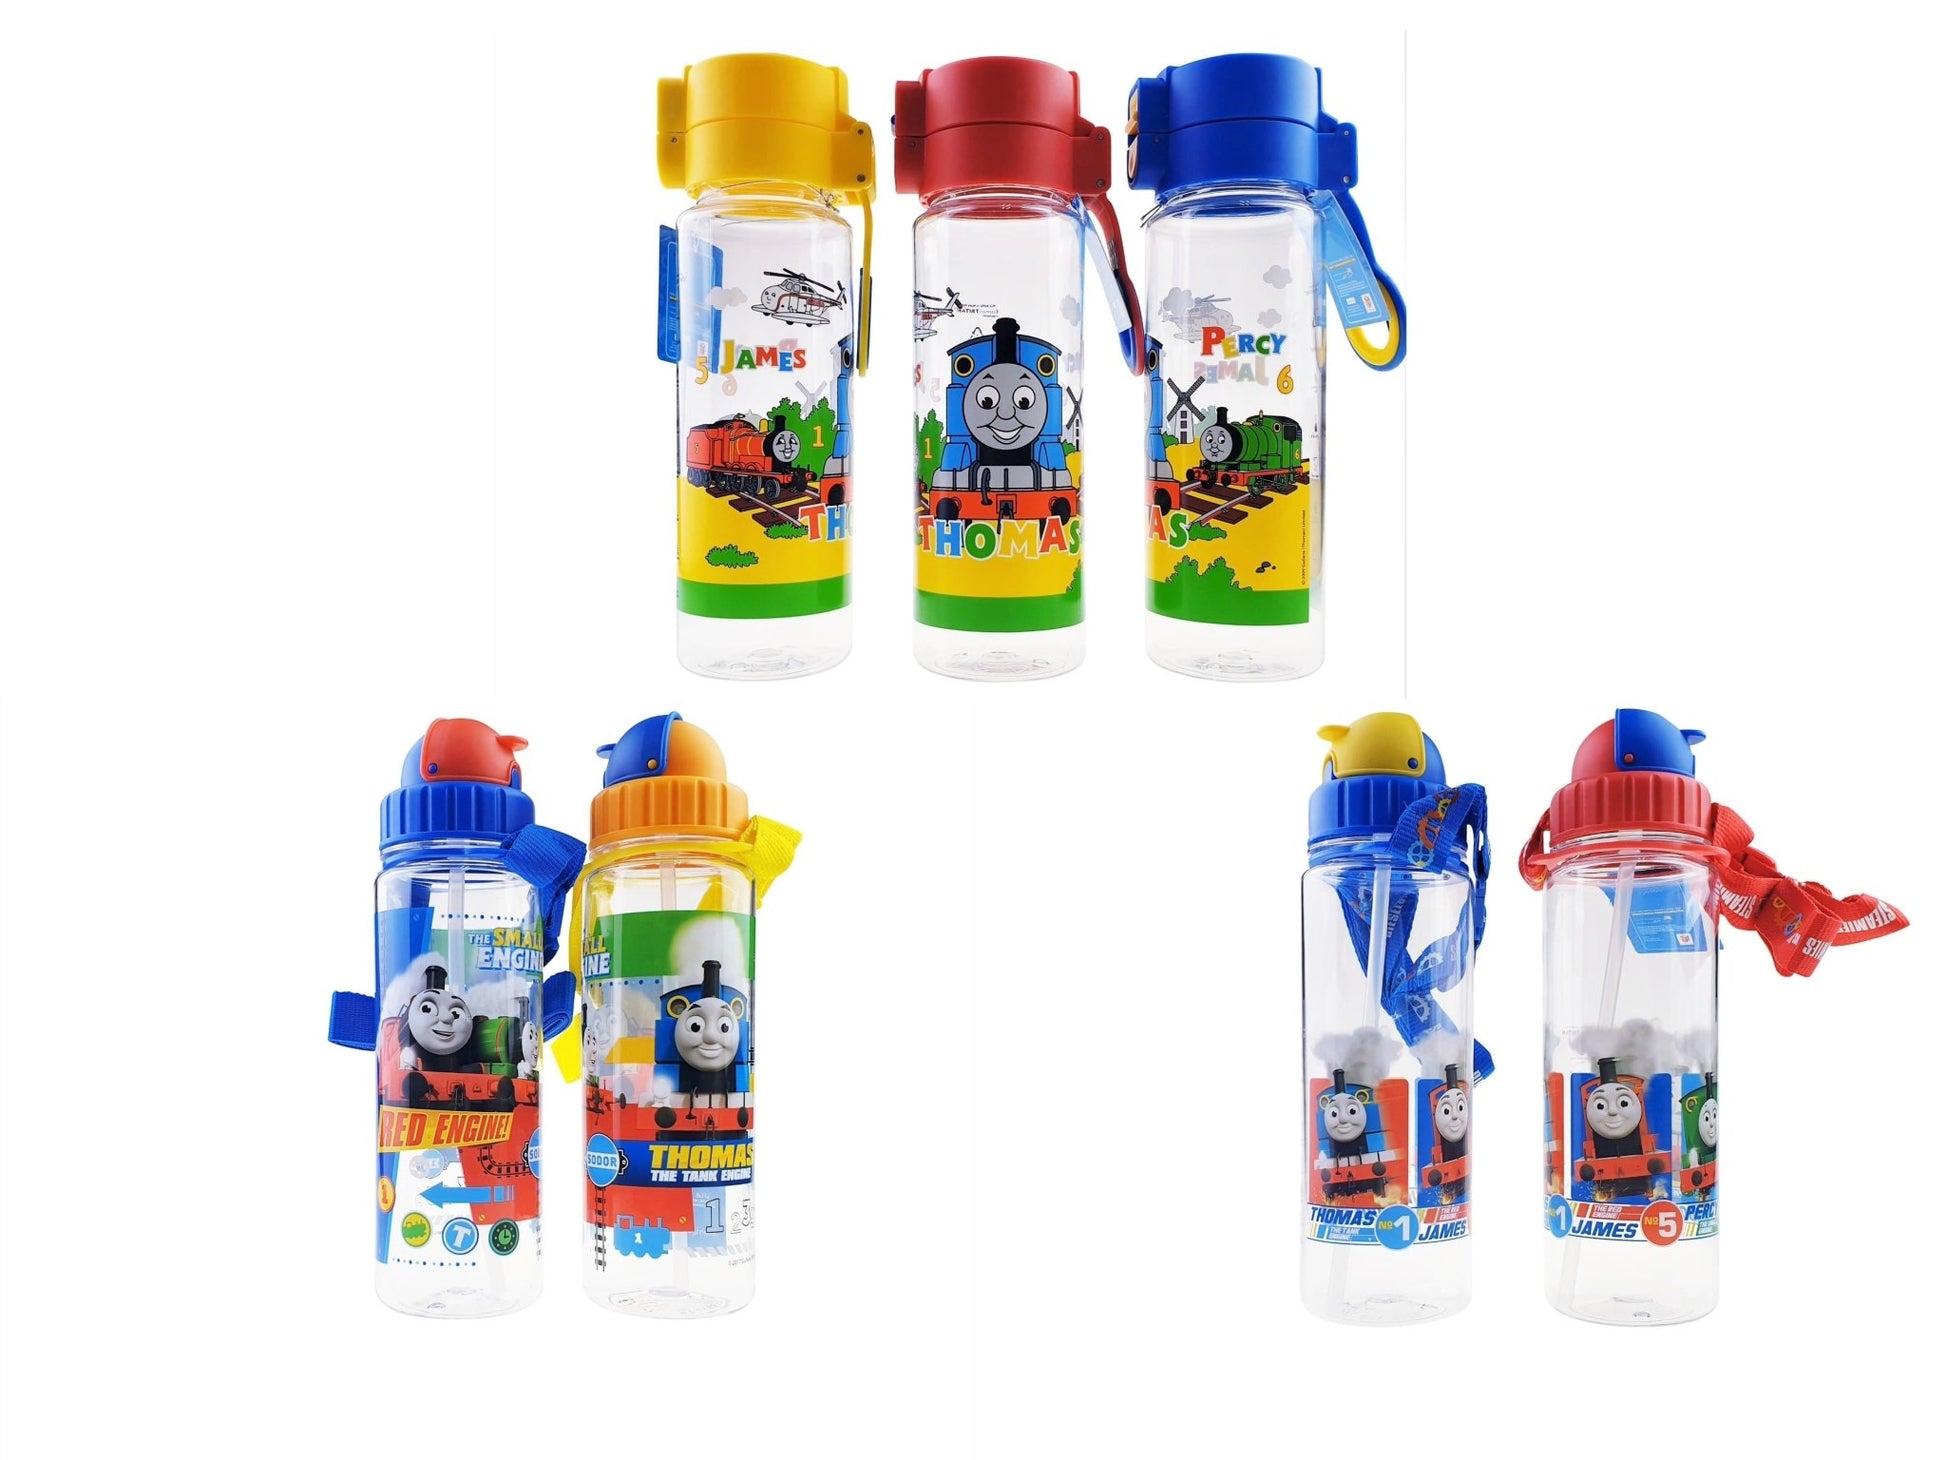 Thomas & Friends - 450 ml Water Bottle (BPA Free) - Various Prints/Caps - Simply Life